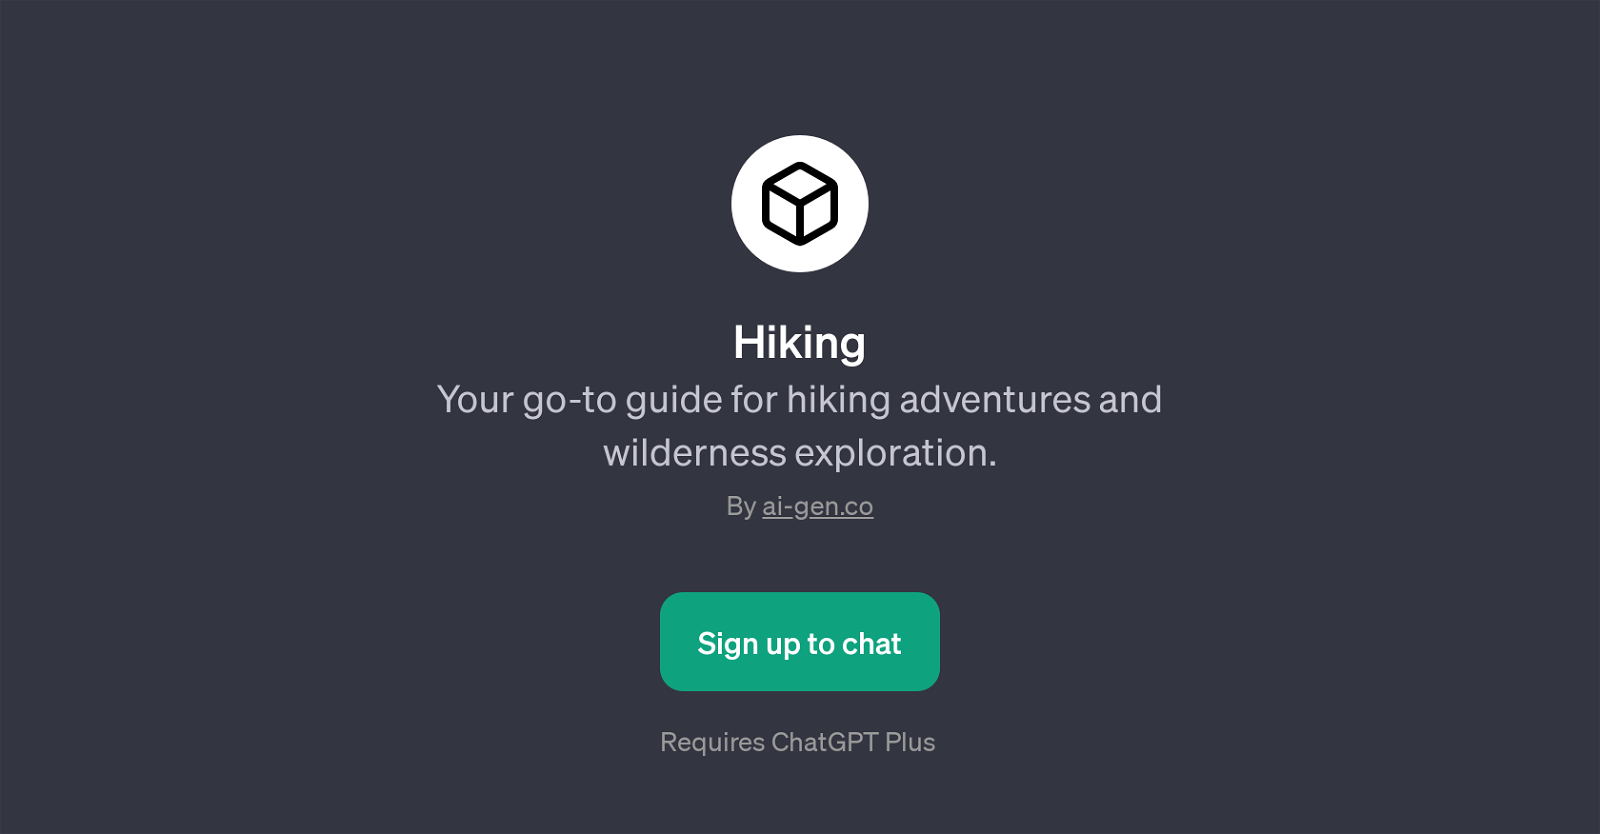 HikingPage website